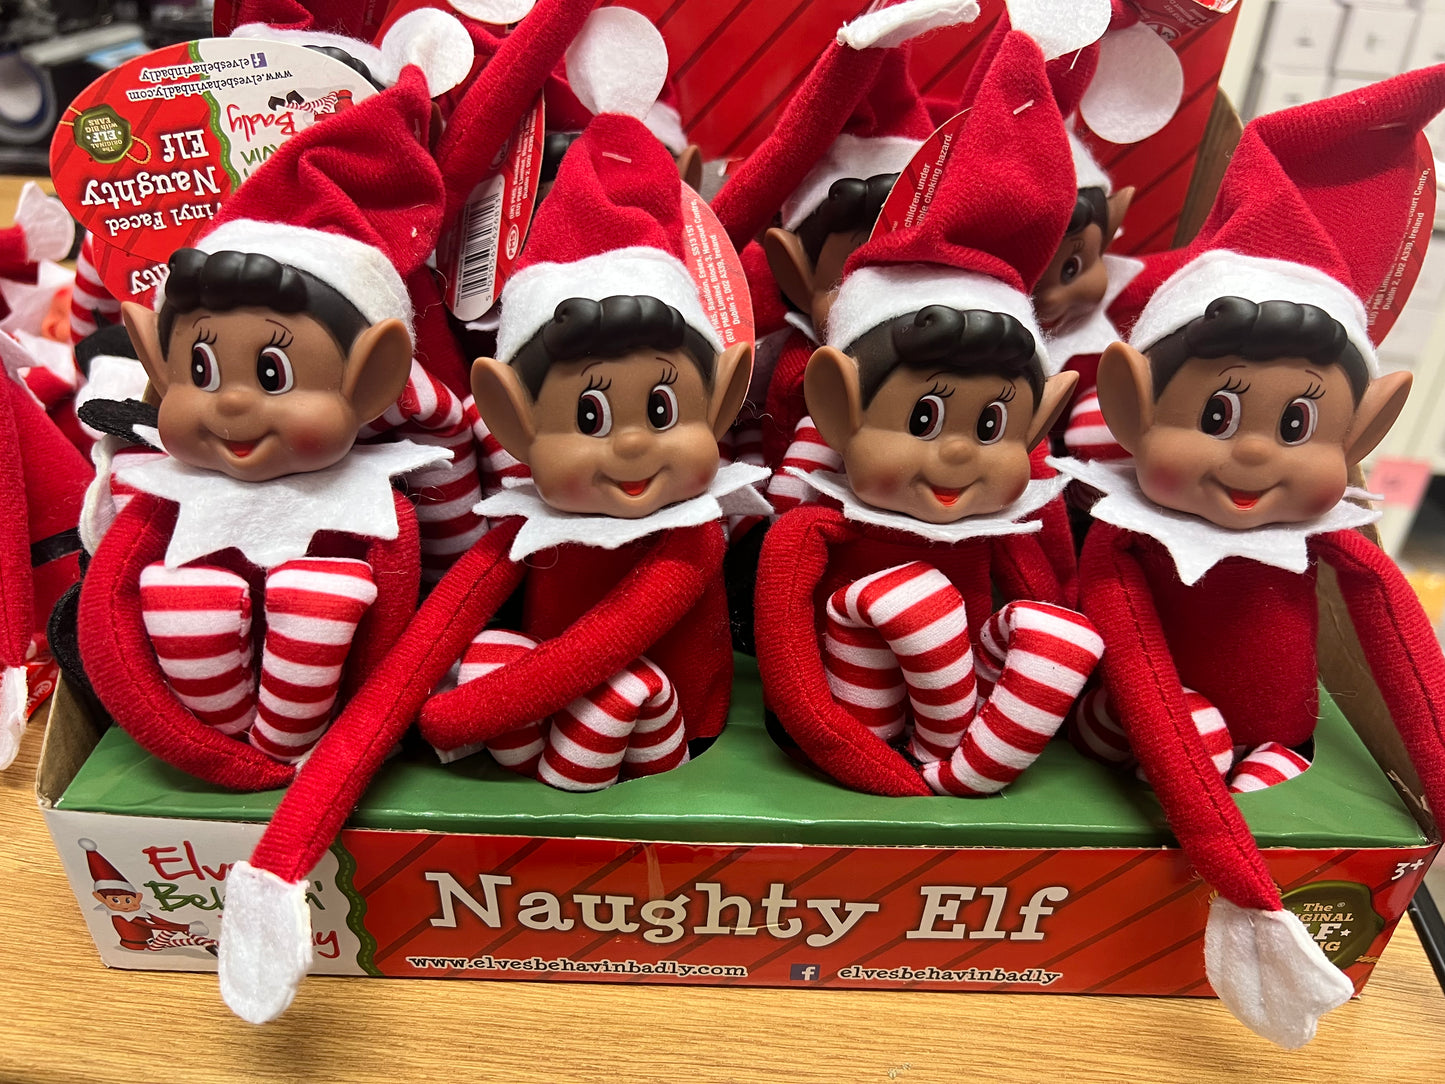 Naughty Elf on the Shelf